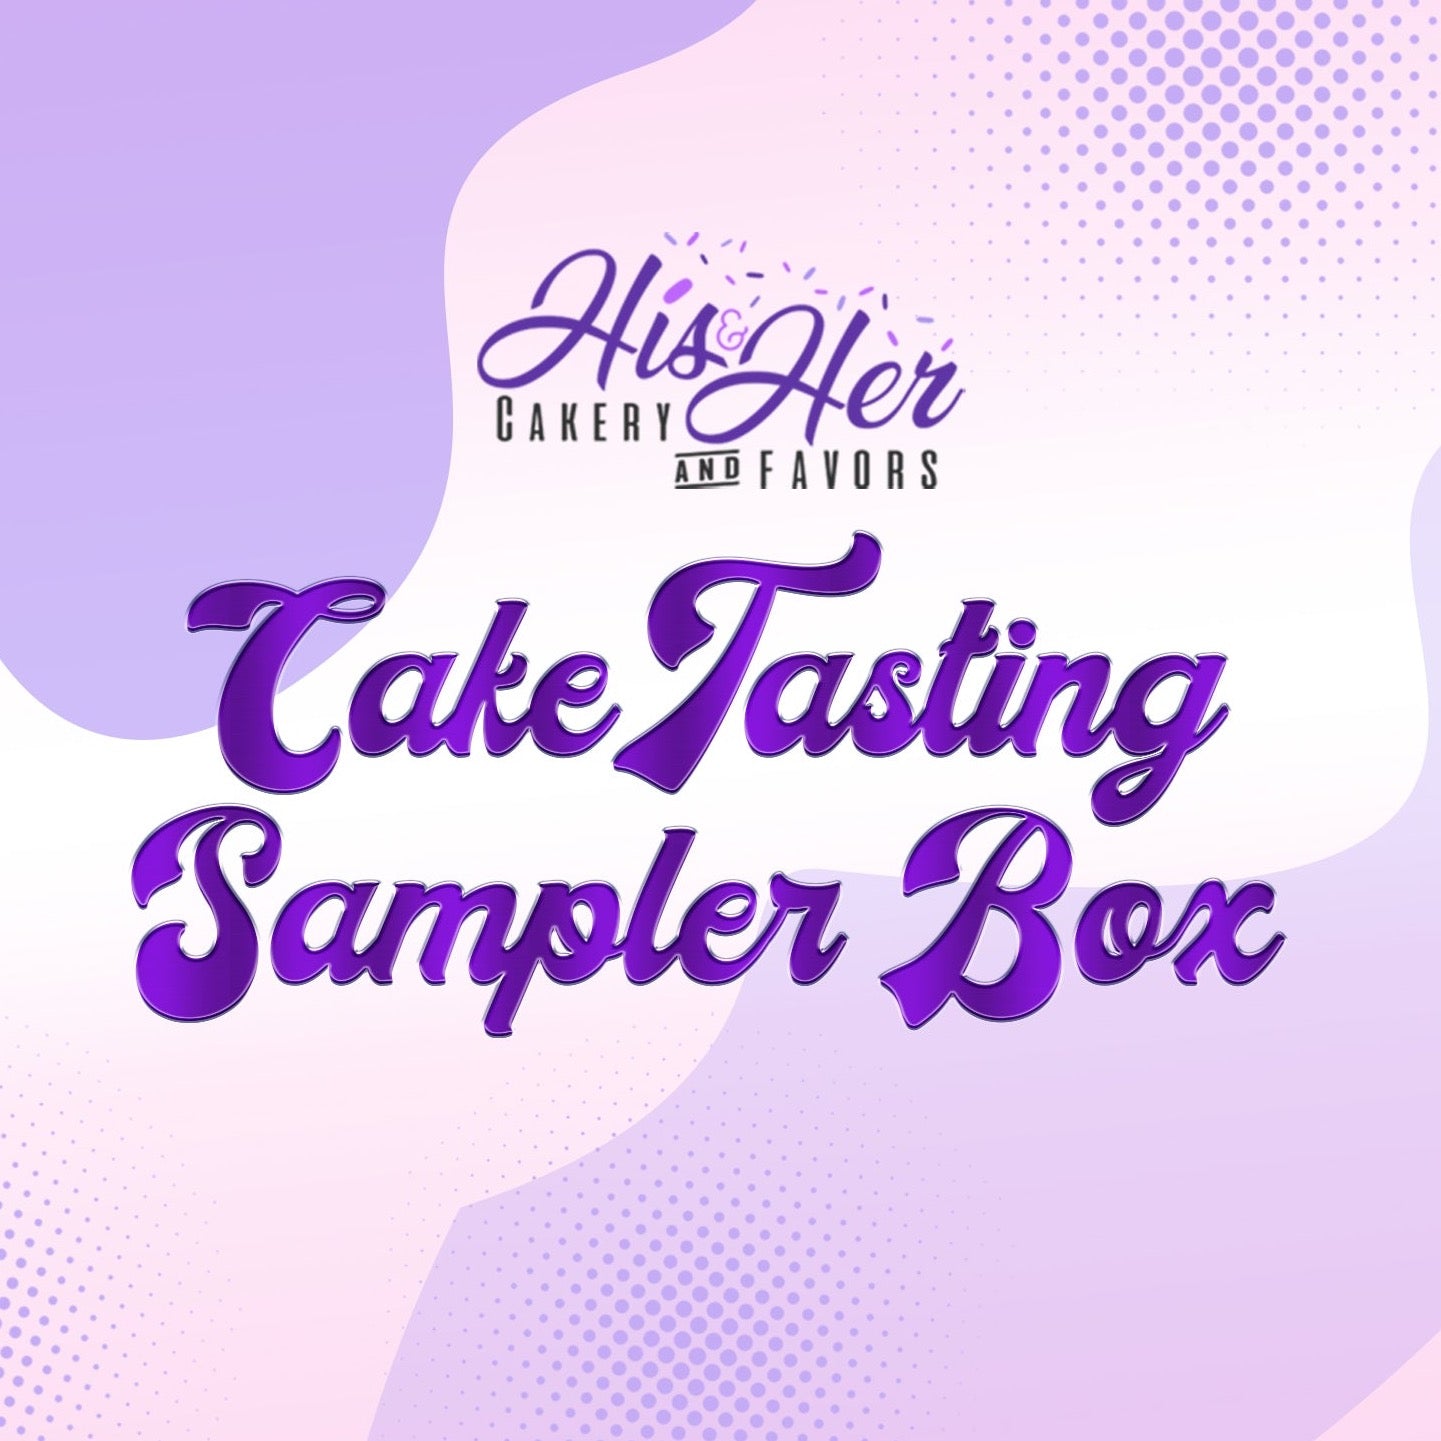 Cake Tasting Sampler Box